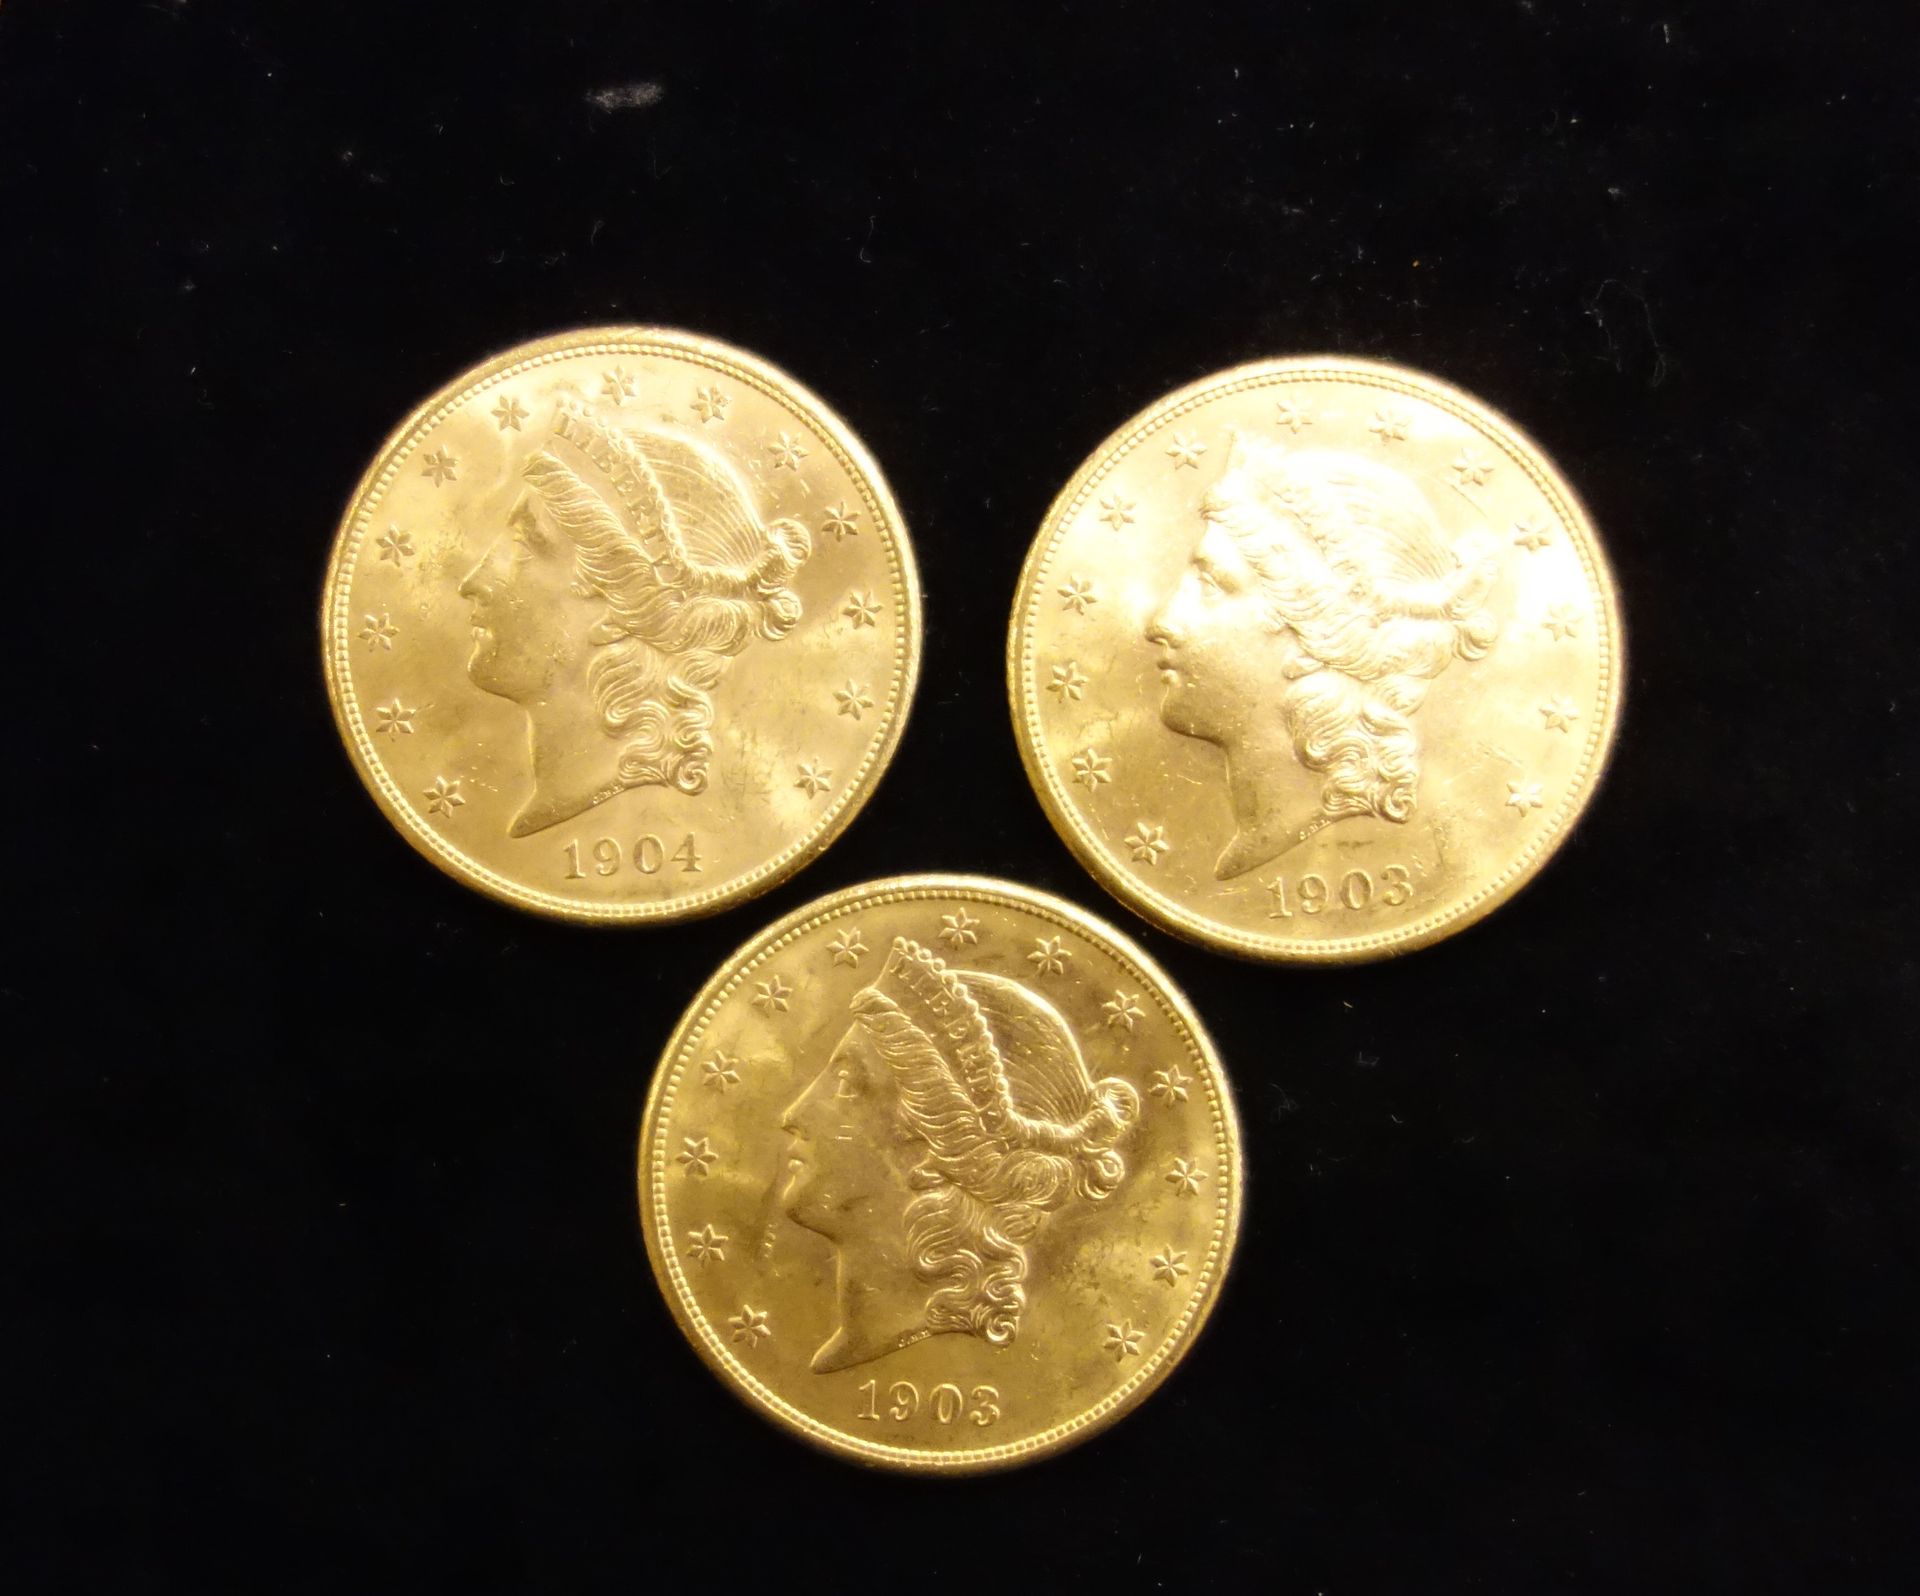 Null Tres monedas de oro de 20 dólares.
Peso: 100,25 g